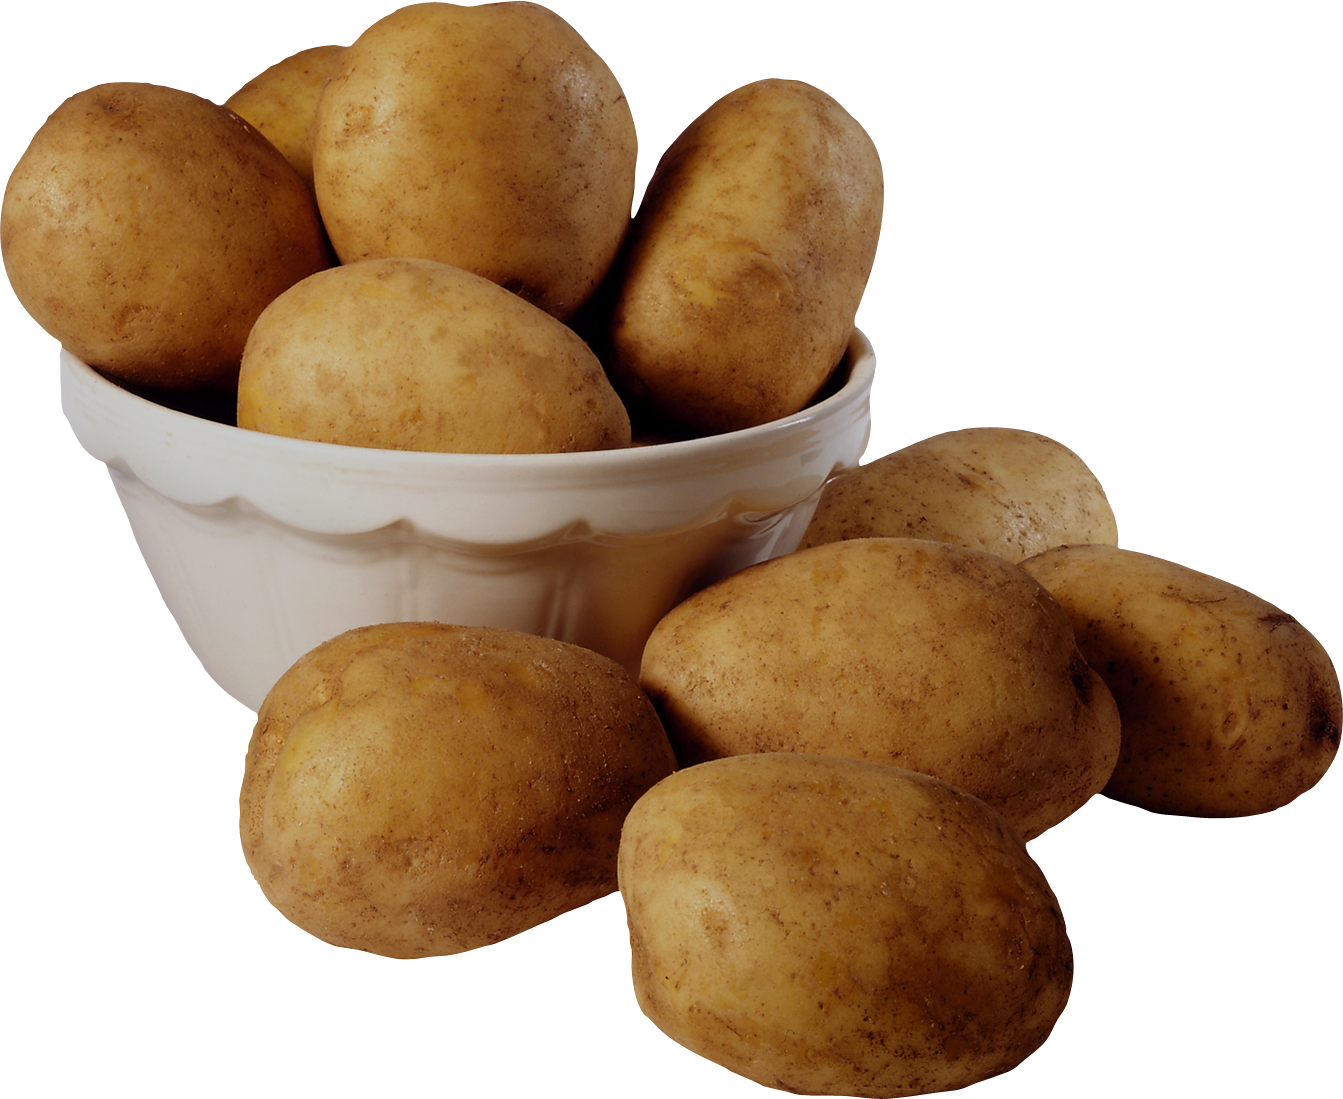 Potato clipart brown potato, Potato brown potato Transparent FREE for